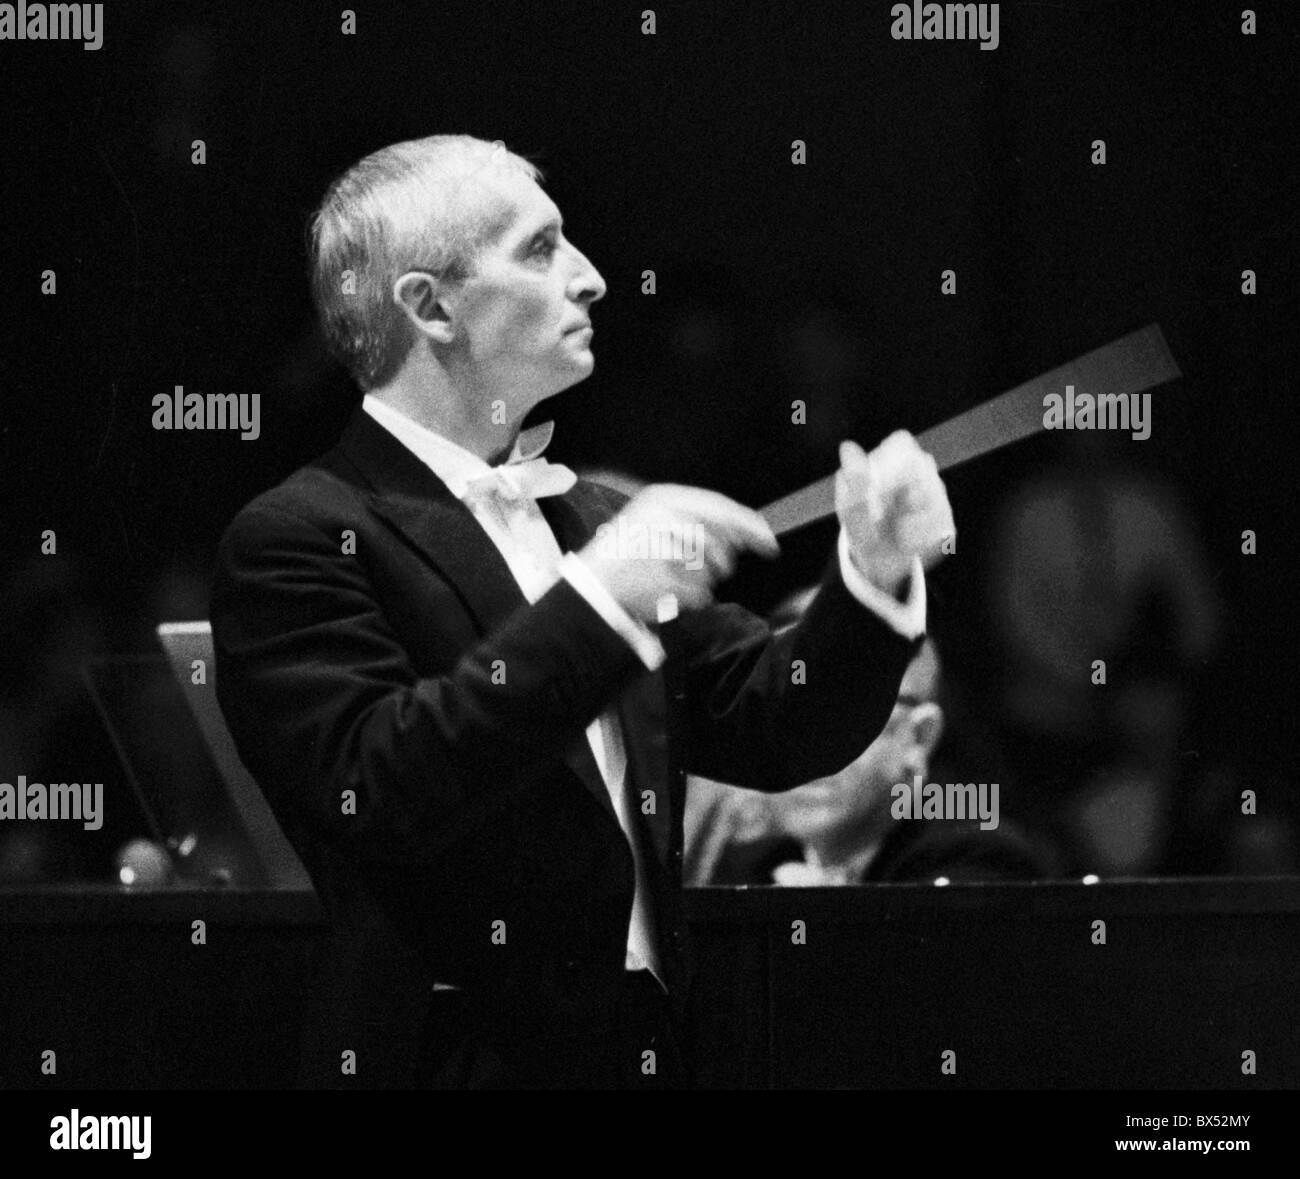 Principal conductor of the Czech Philharmonic Orchestra Vaclav Neumann, November 1968. CTK Photo/Jiri Karas Stock Photo